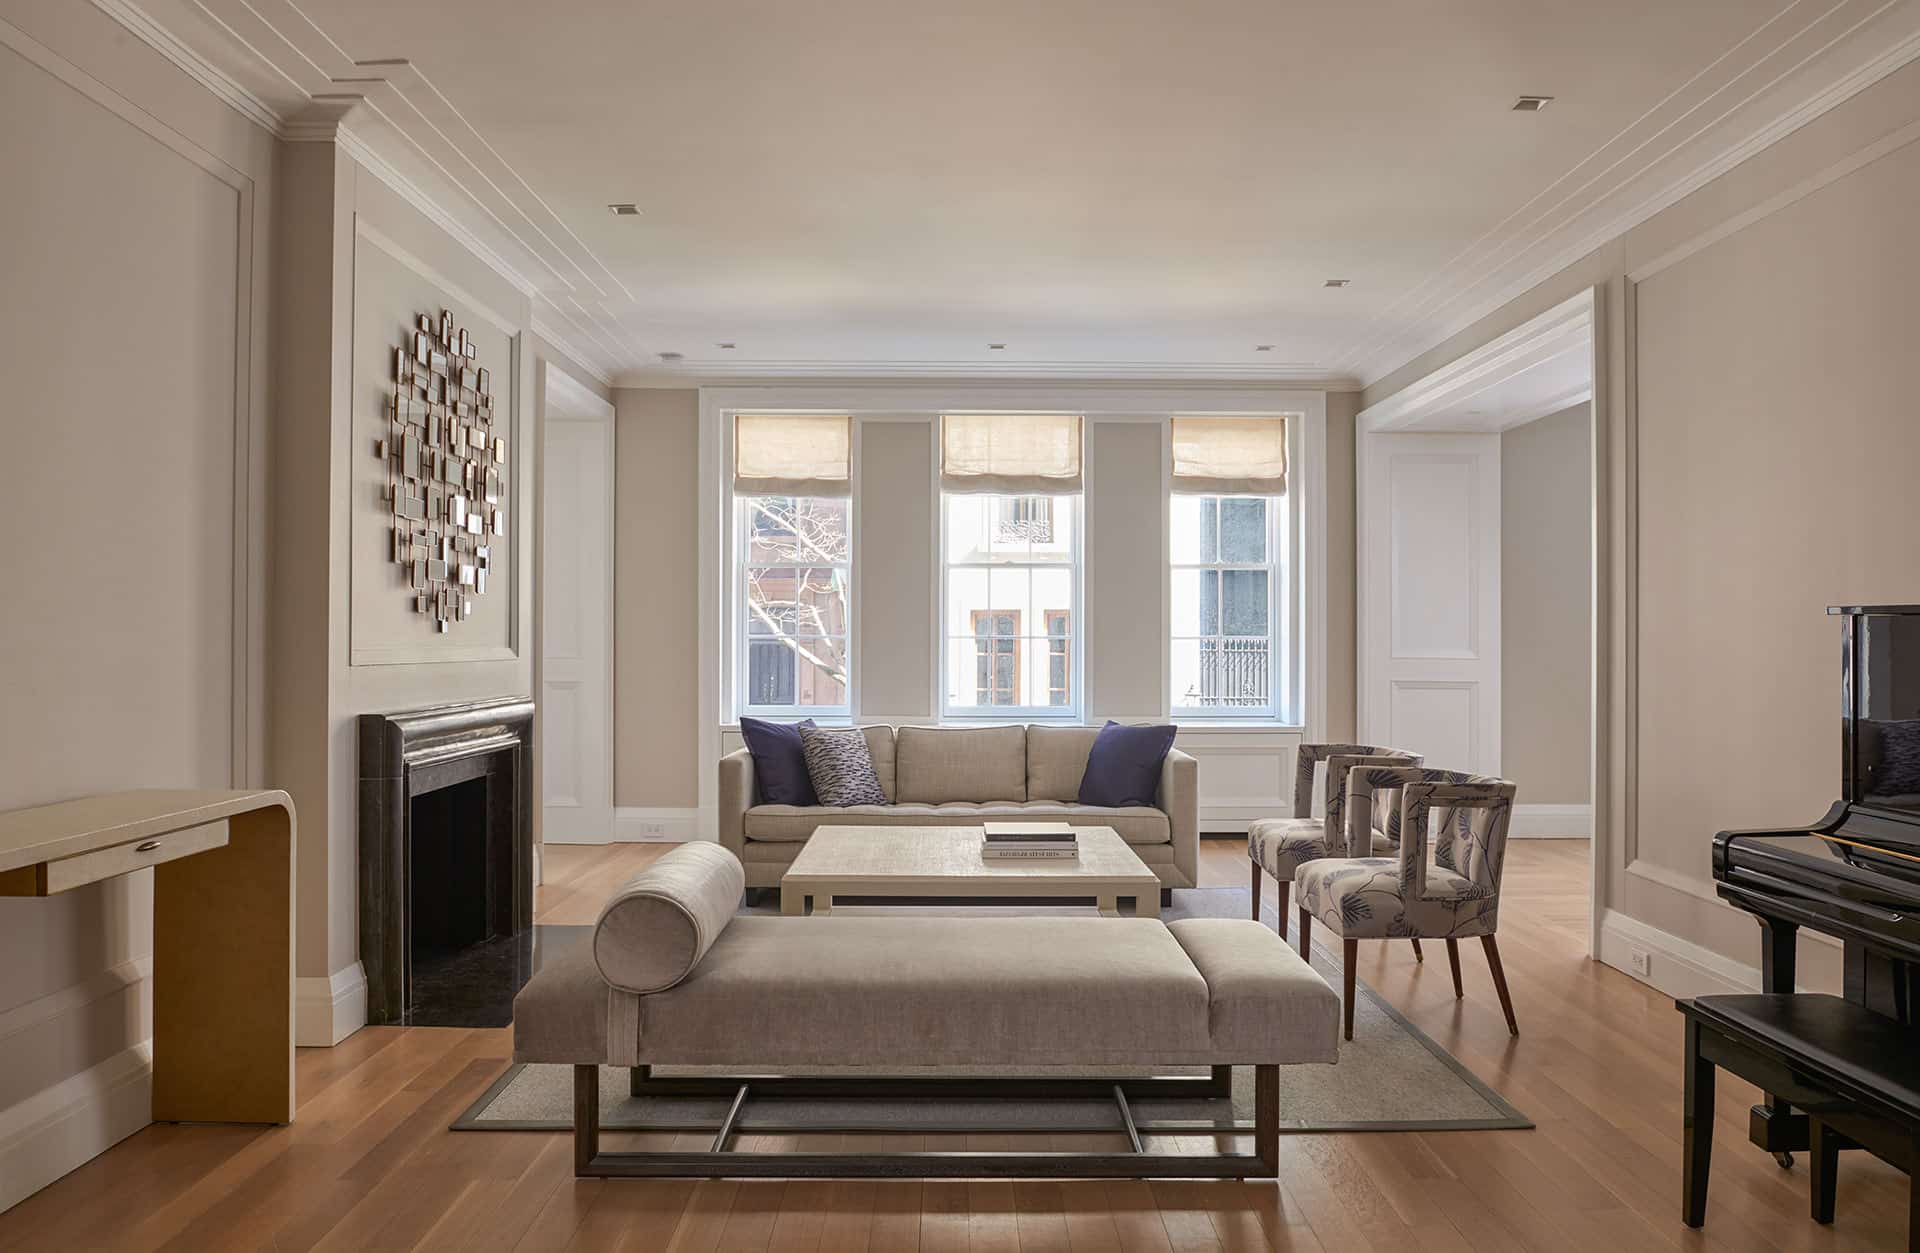 Park Avenue Apartment Living Room Architecture After Renovation | Rodman Paul Architects